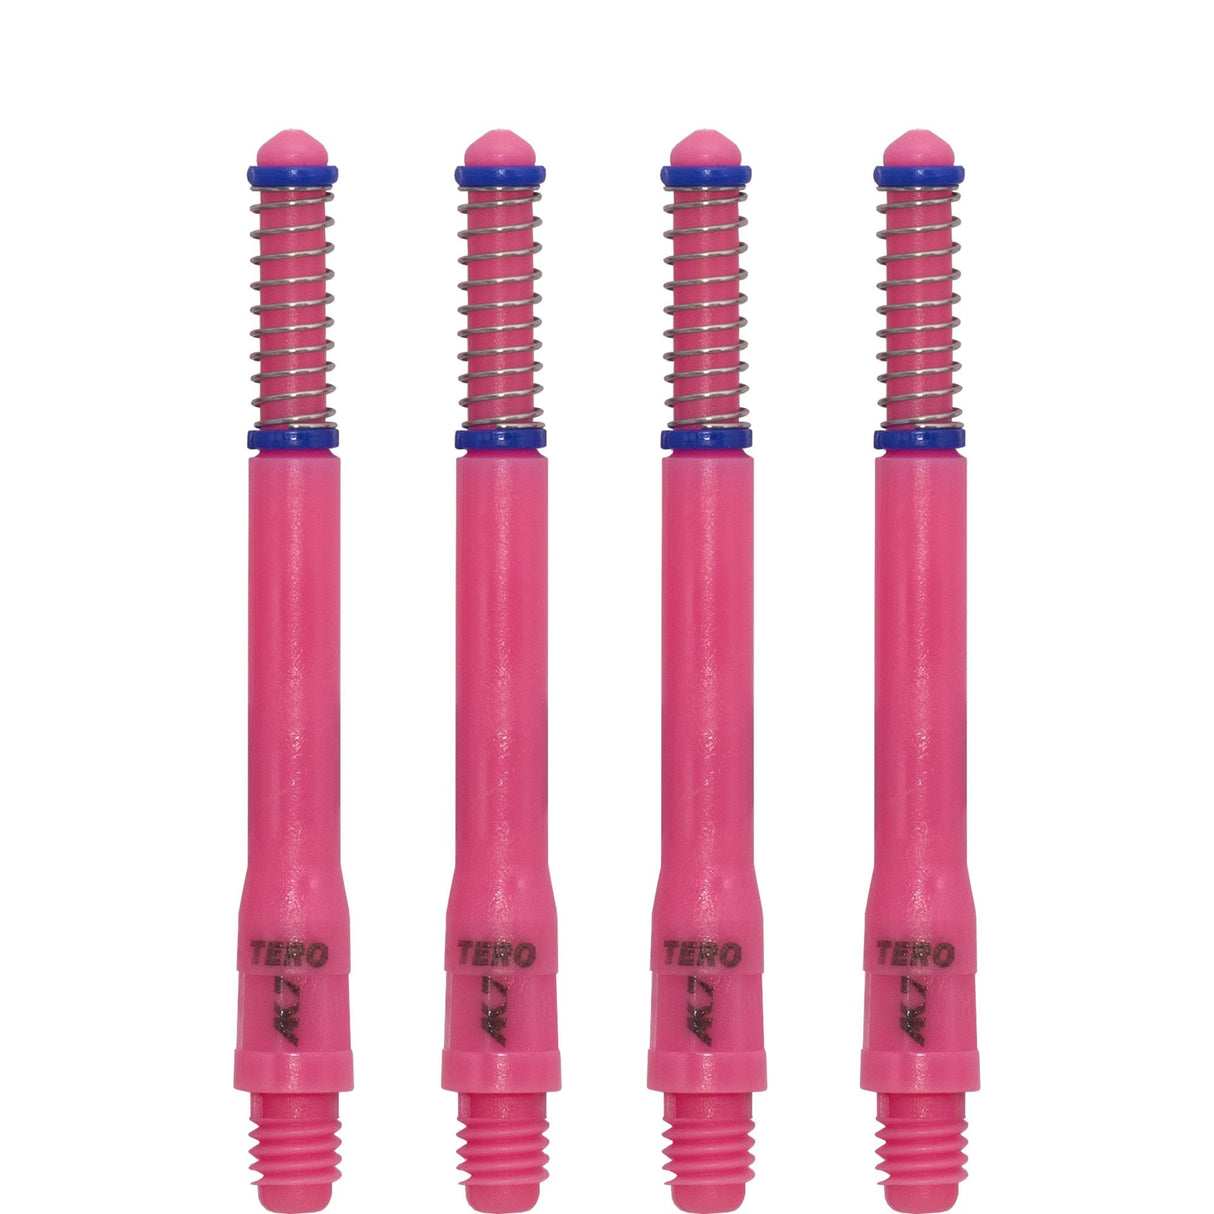 Cuesoul - Dart Shafts - Tero Flight System - AK7 - Standard - Set of 4 - Pink Cuesoul 47mm